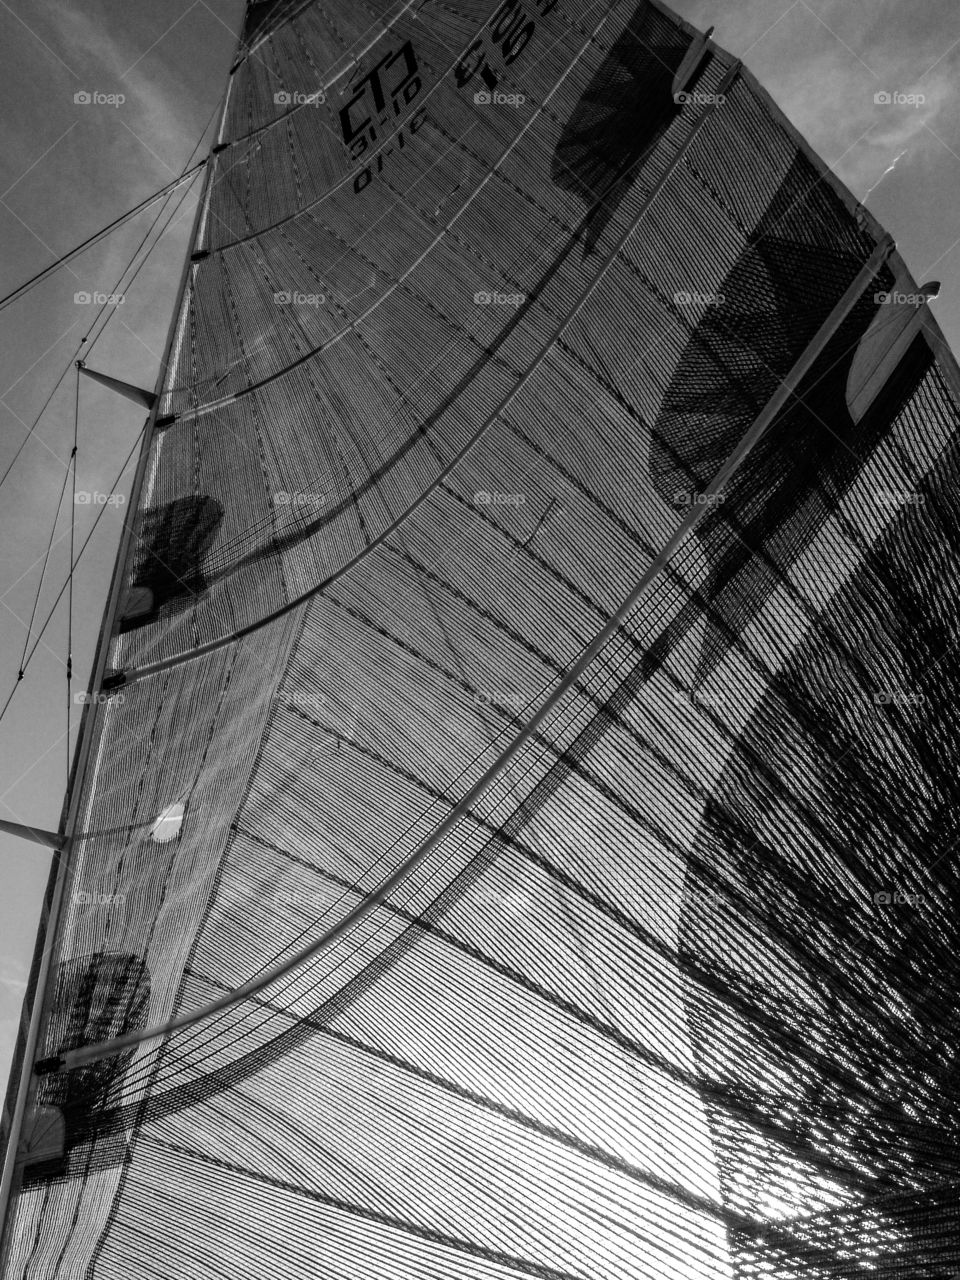 Mylar sails